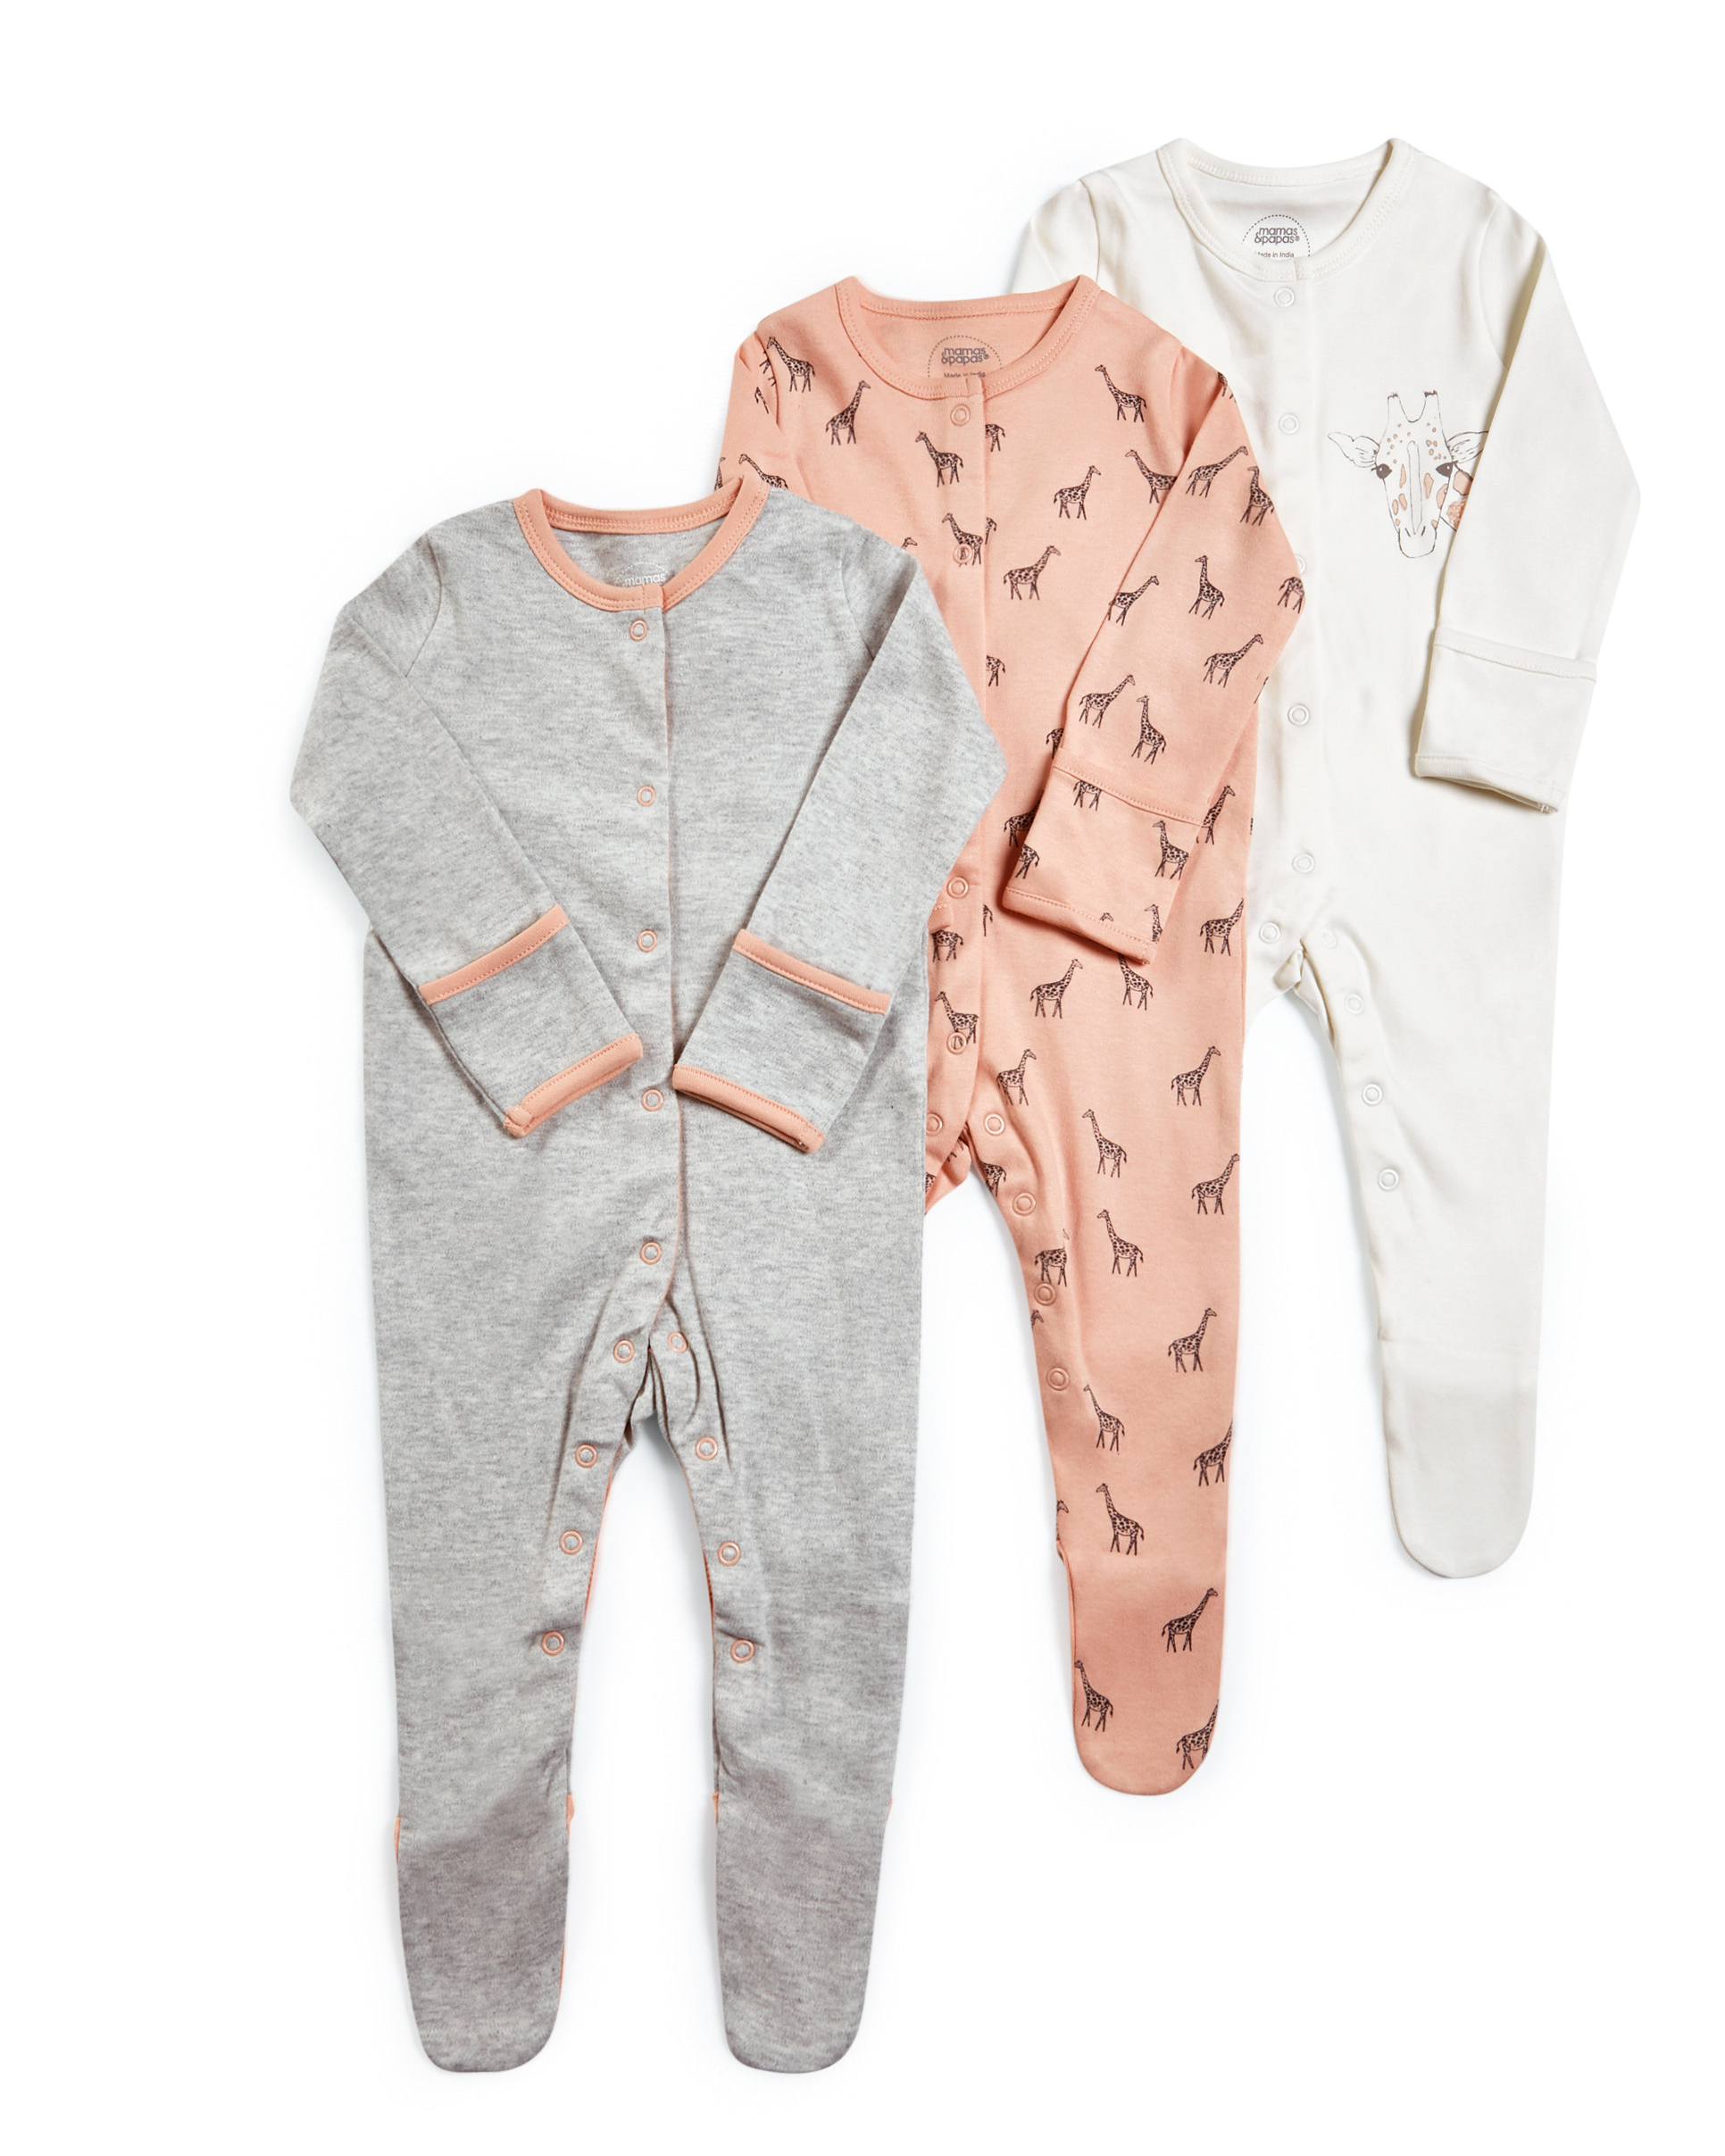 Buy Mamas & Papas Giraffe Jersey Sleepsuits - 3 Pack - Baby Boy Rompers ...